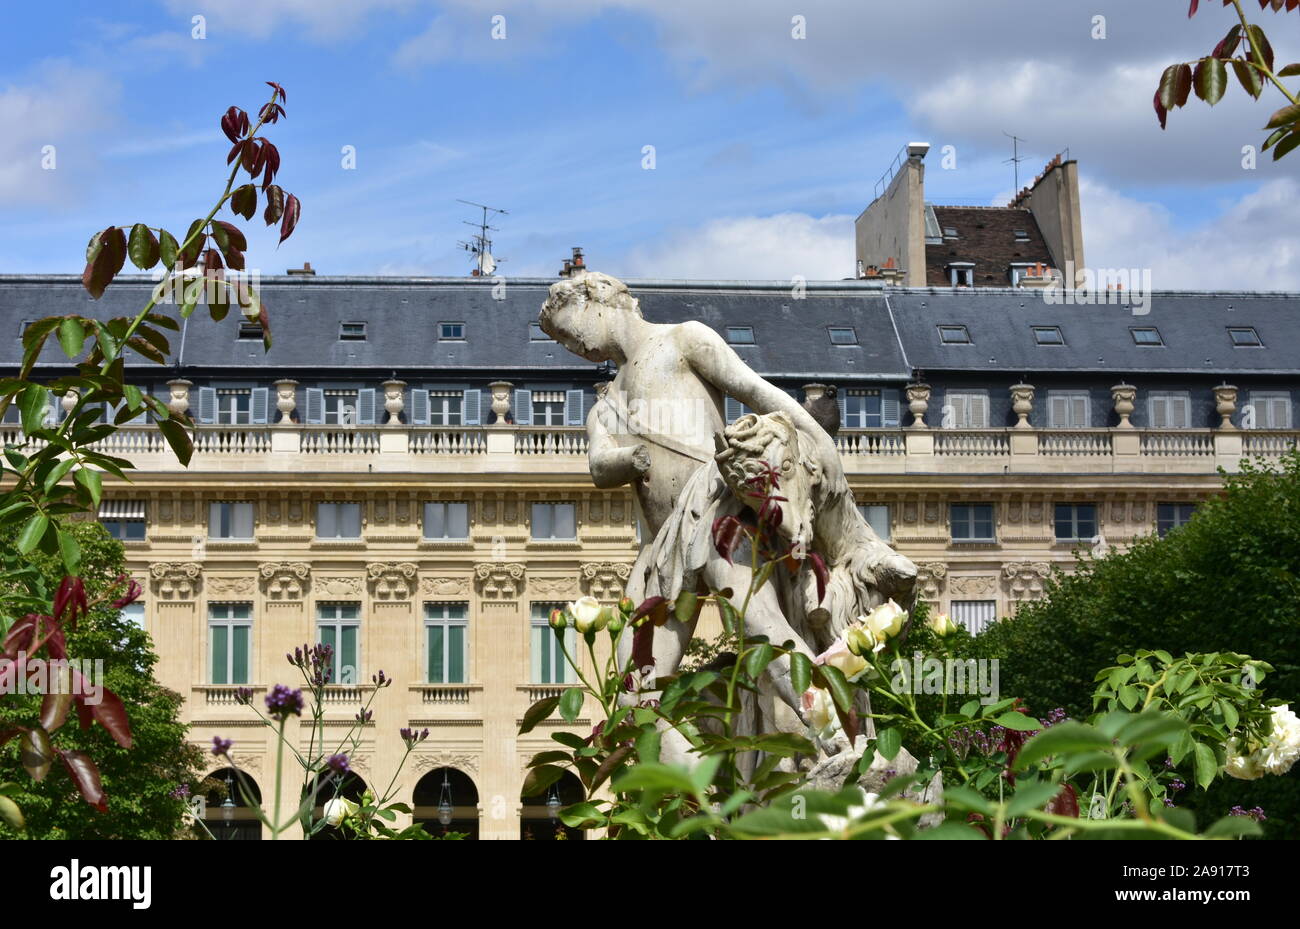 Famous Palais Royal, former Royal Palace close to the Louvre Museum. Paris, France. August 16, 2019. Stock Photo